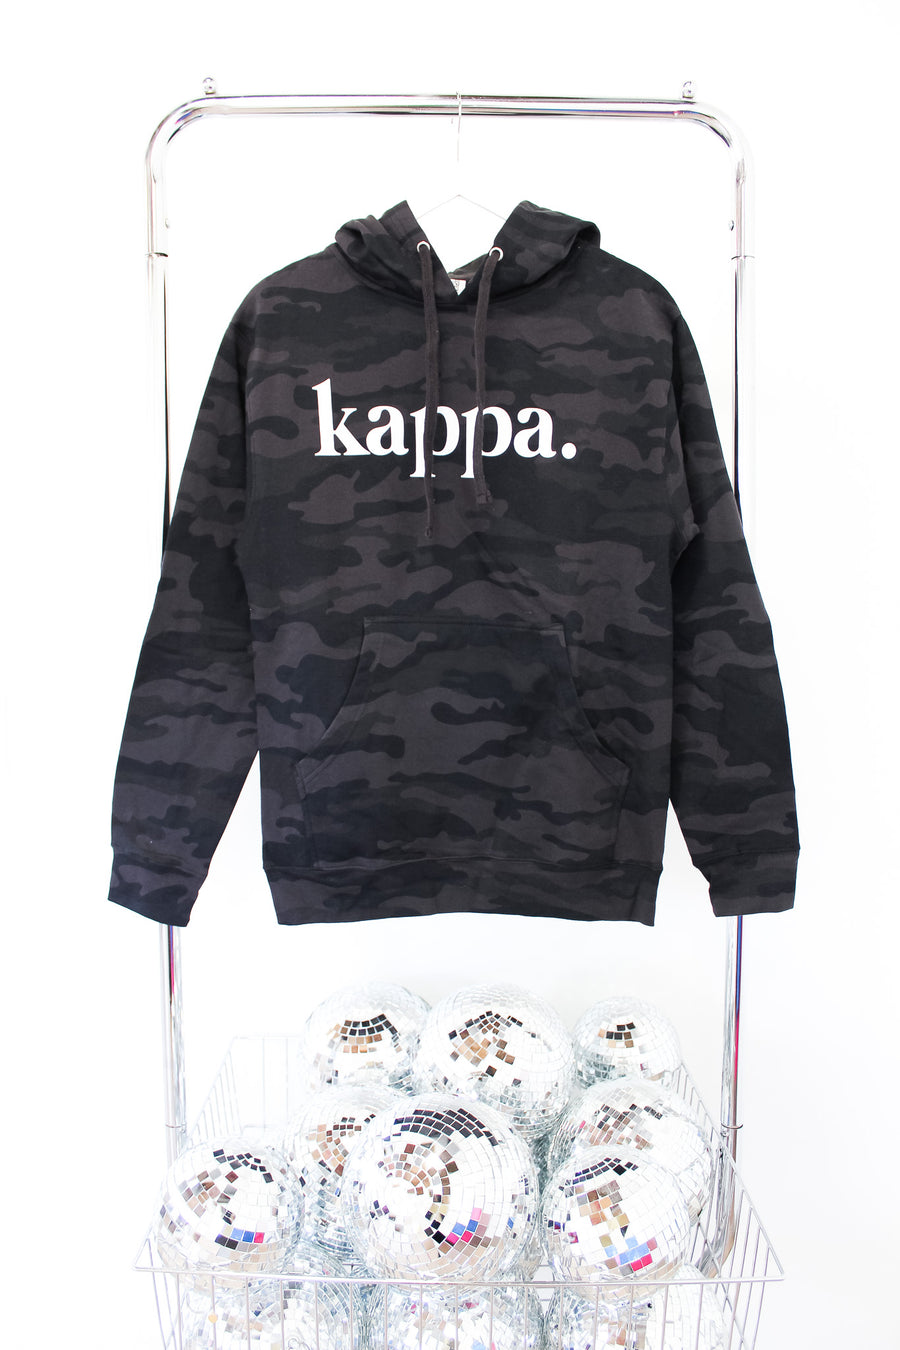 Kappa Kappa Gamma Abbie Sweatshirt - SM BLACK CAMO